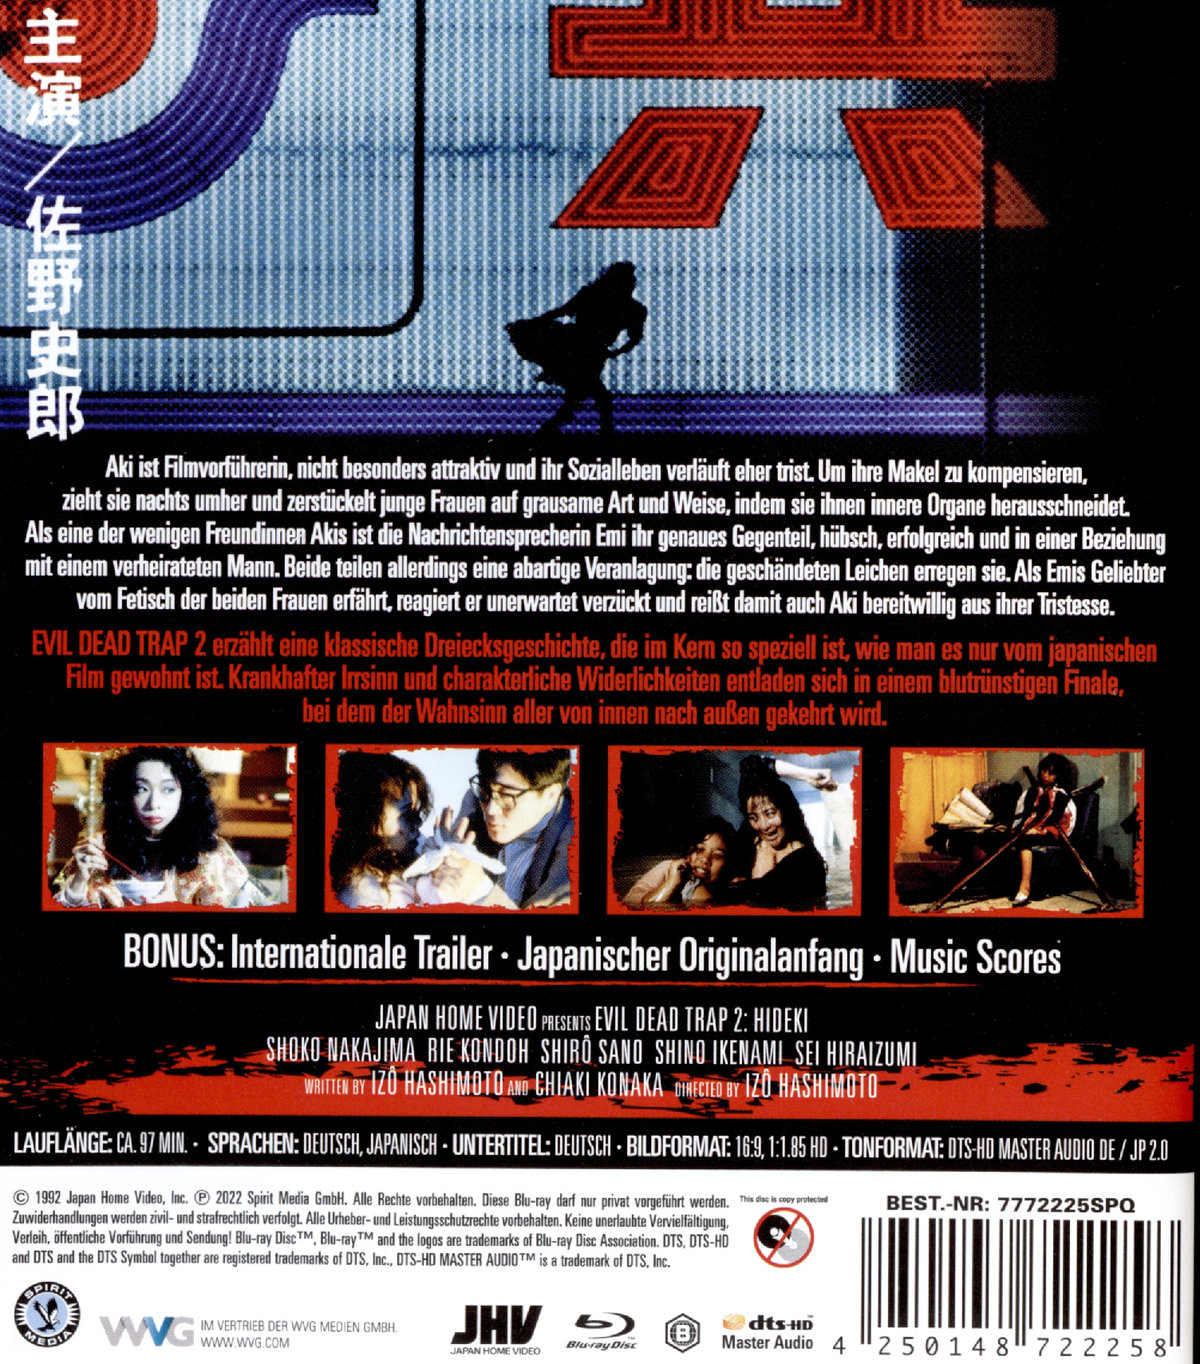 Evil Dead Trap 2 - Hideki the Killer (blu-ray)